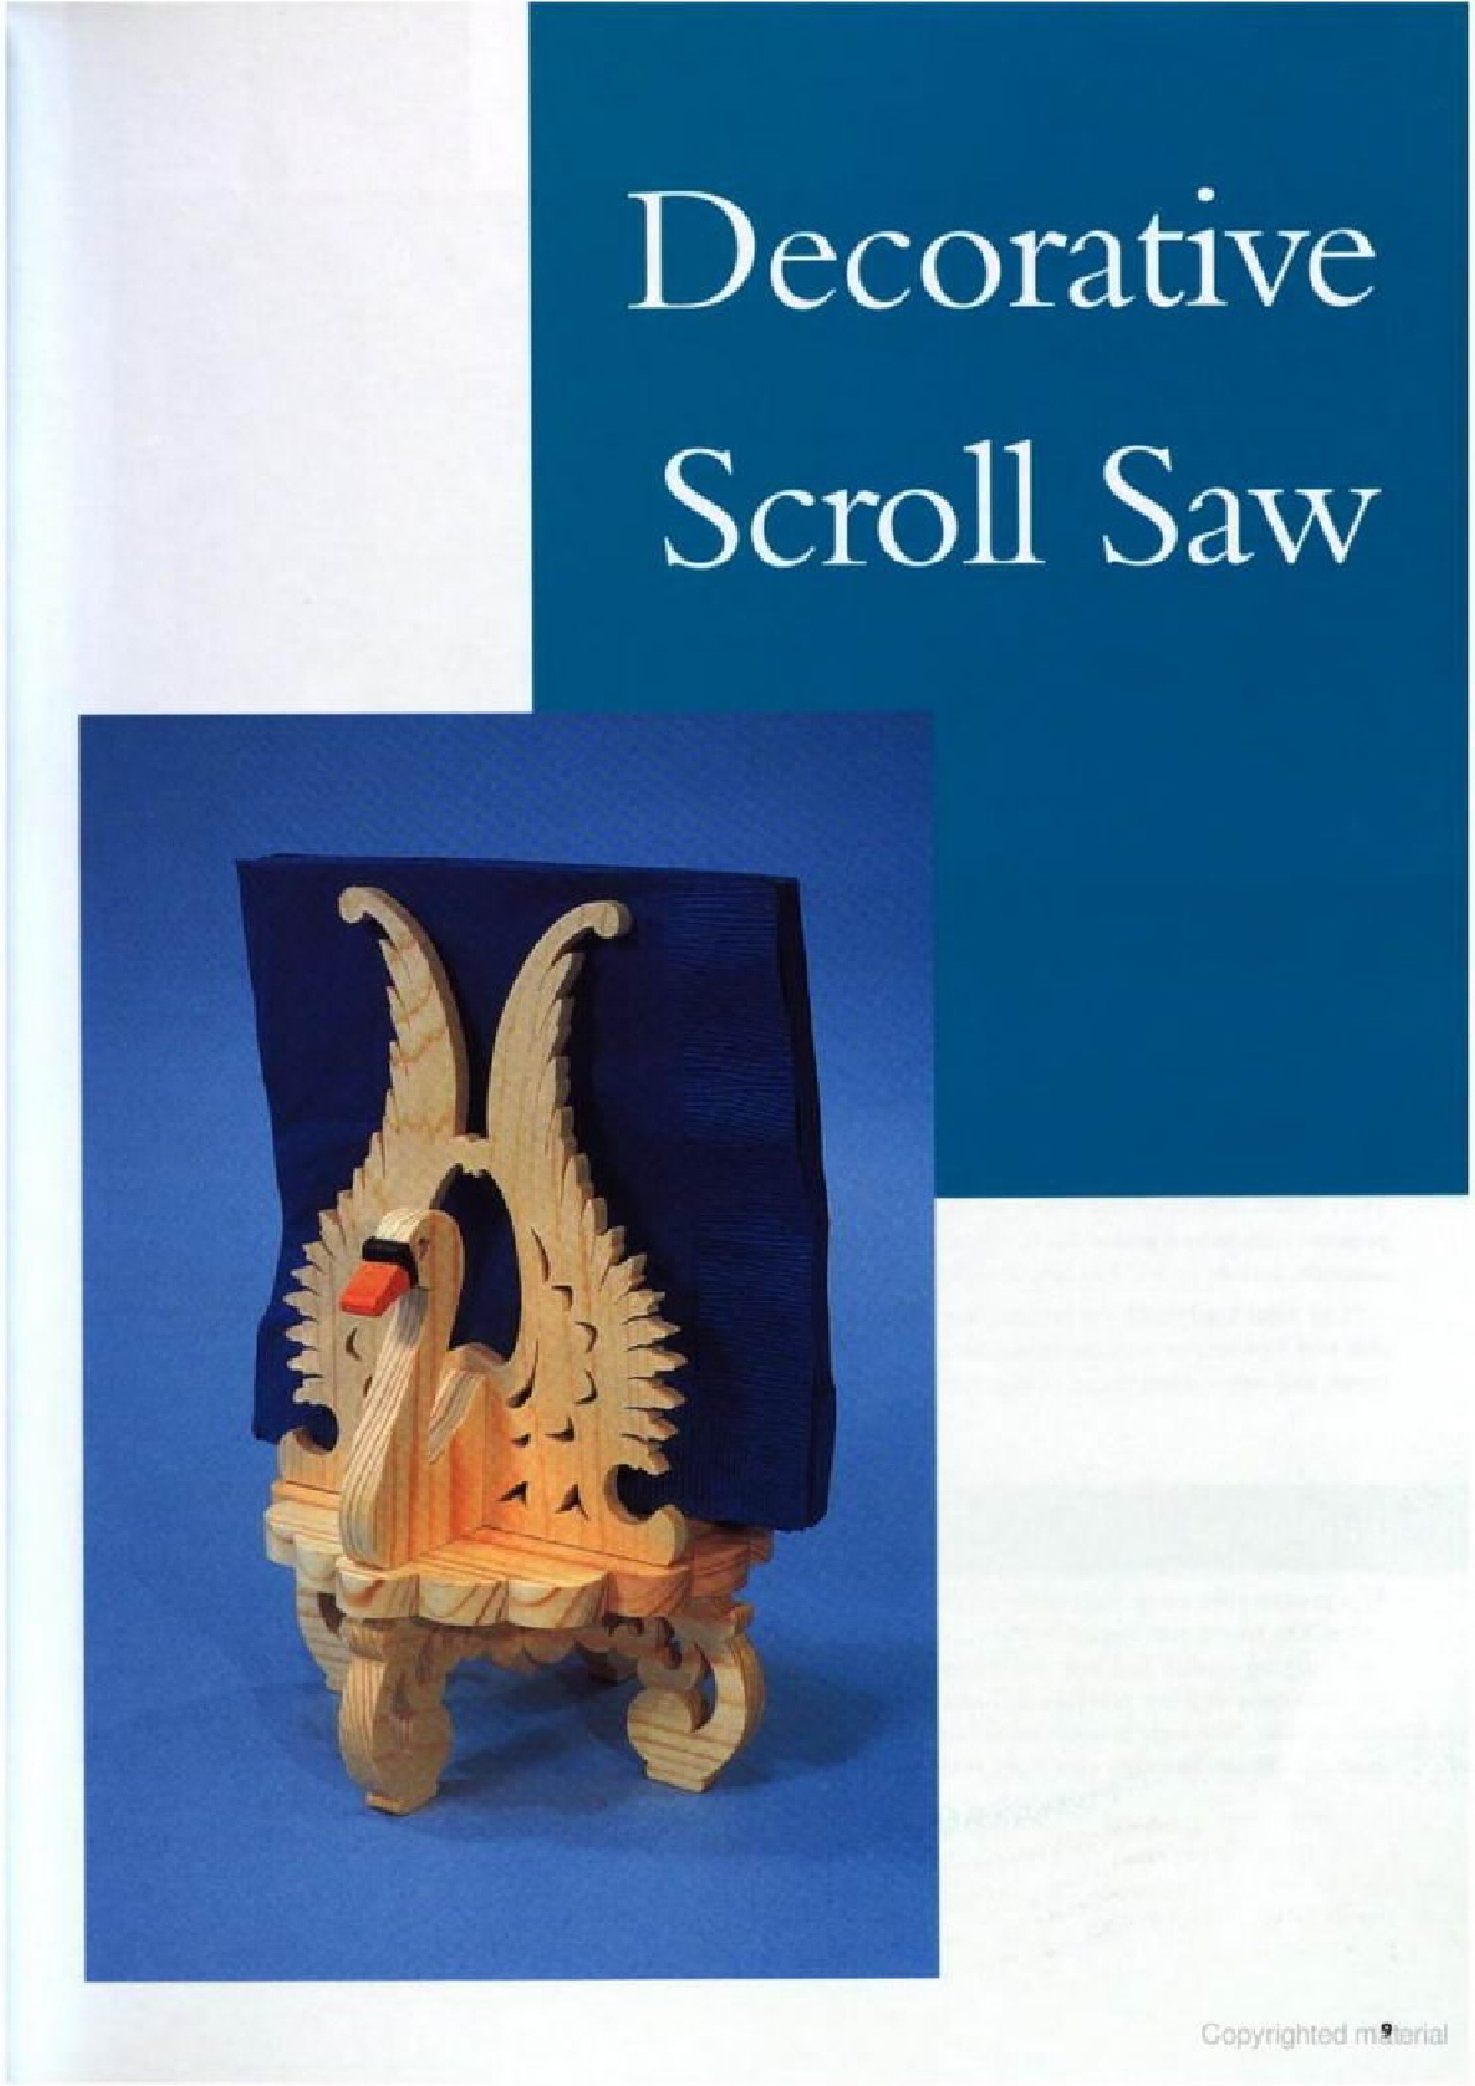 The Pattern Companion - Scroll Saw